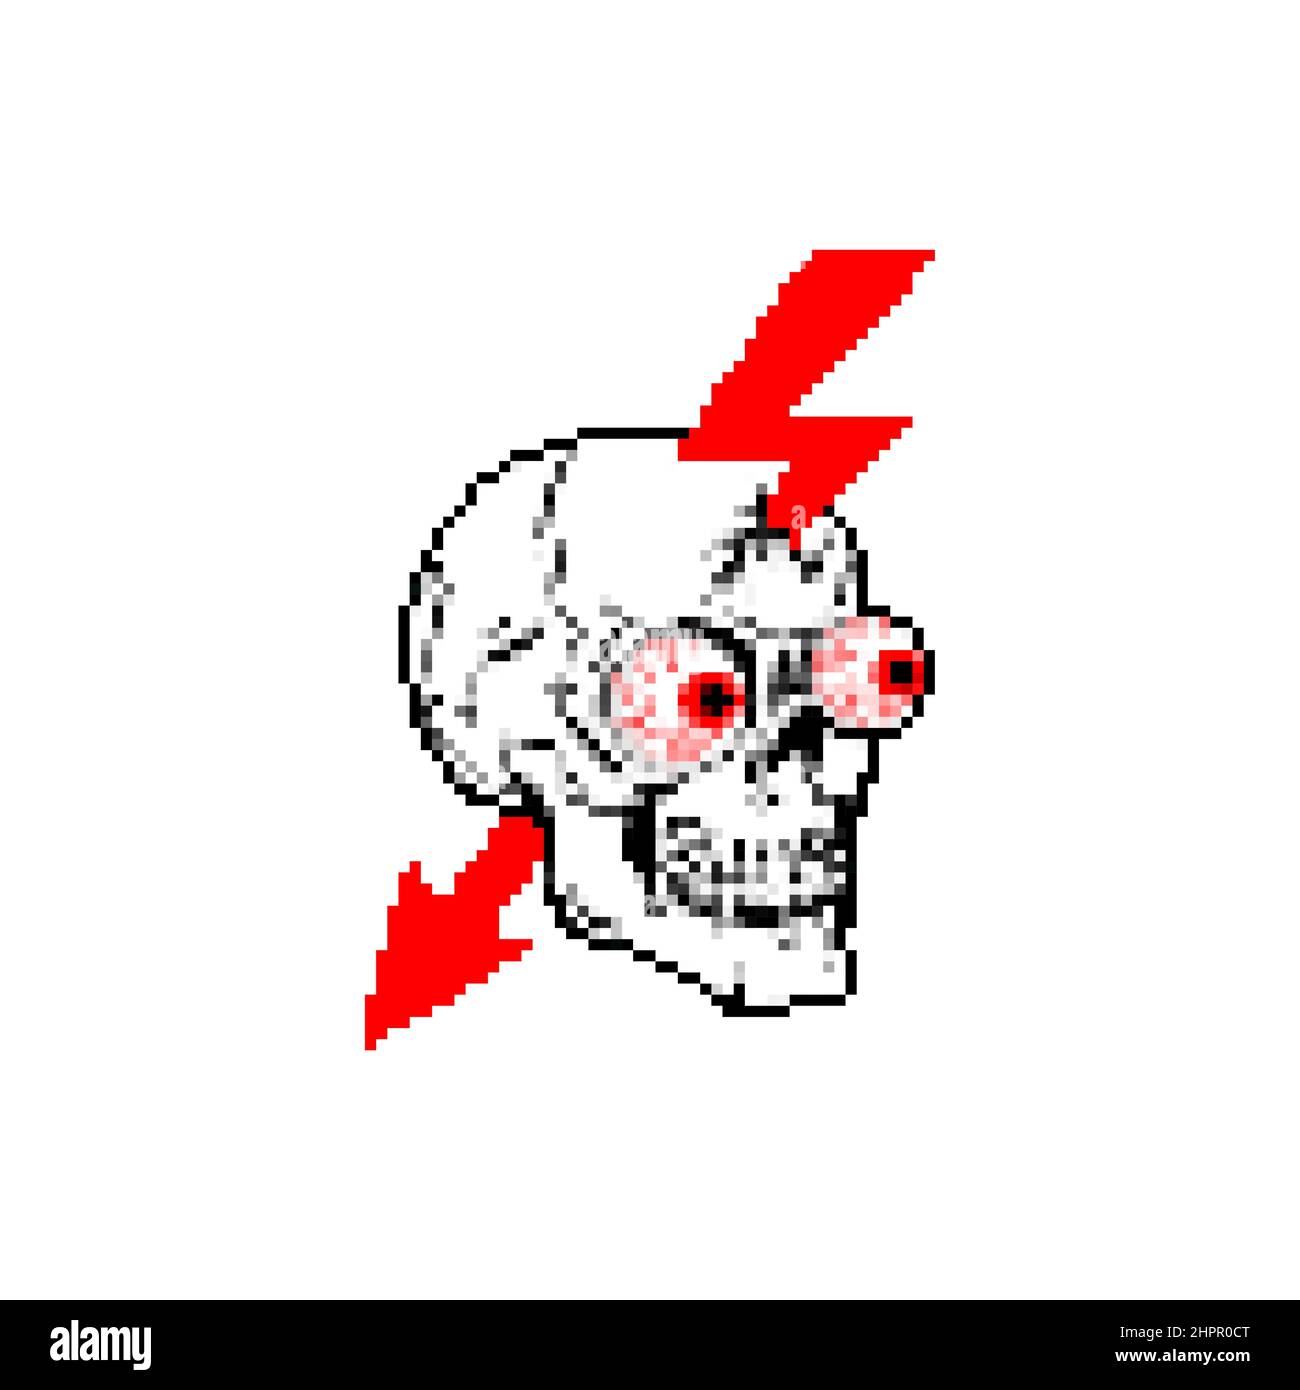 Skull and lightning sign of danger pixel art. Security symbol 8 bit. Danger! Keep out pixelated Stock Vector